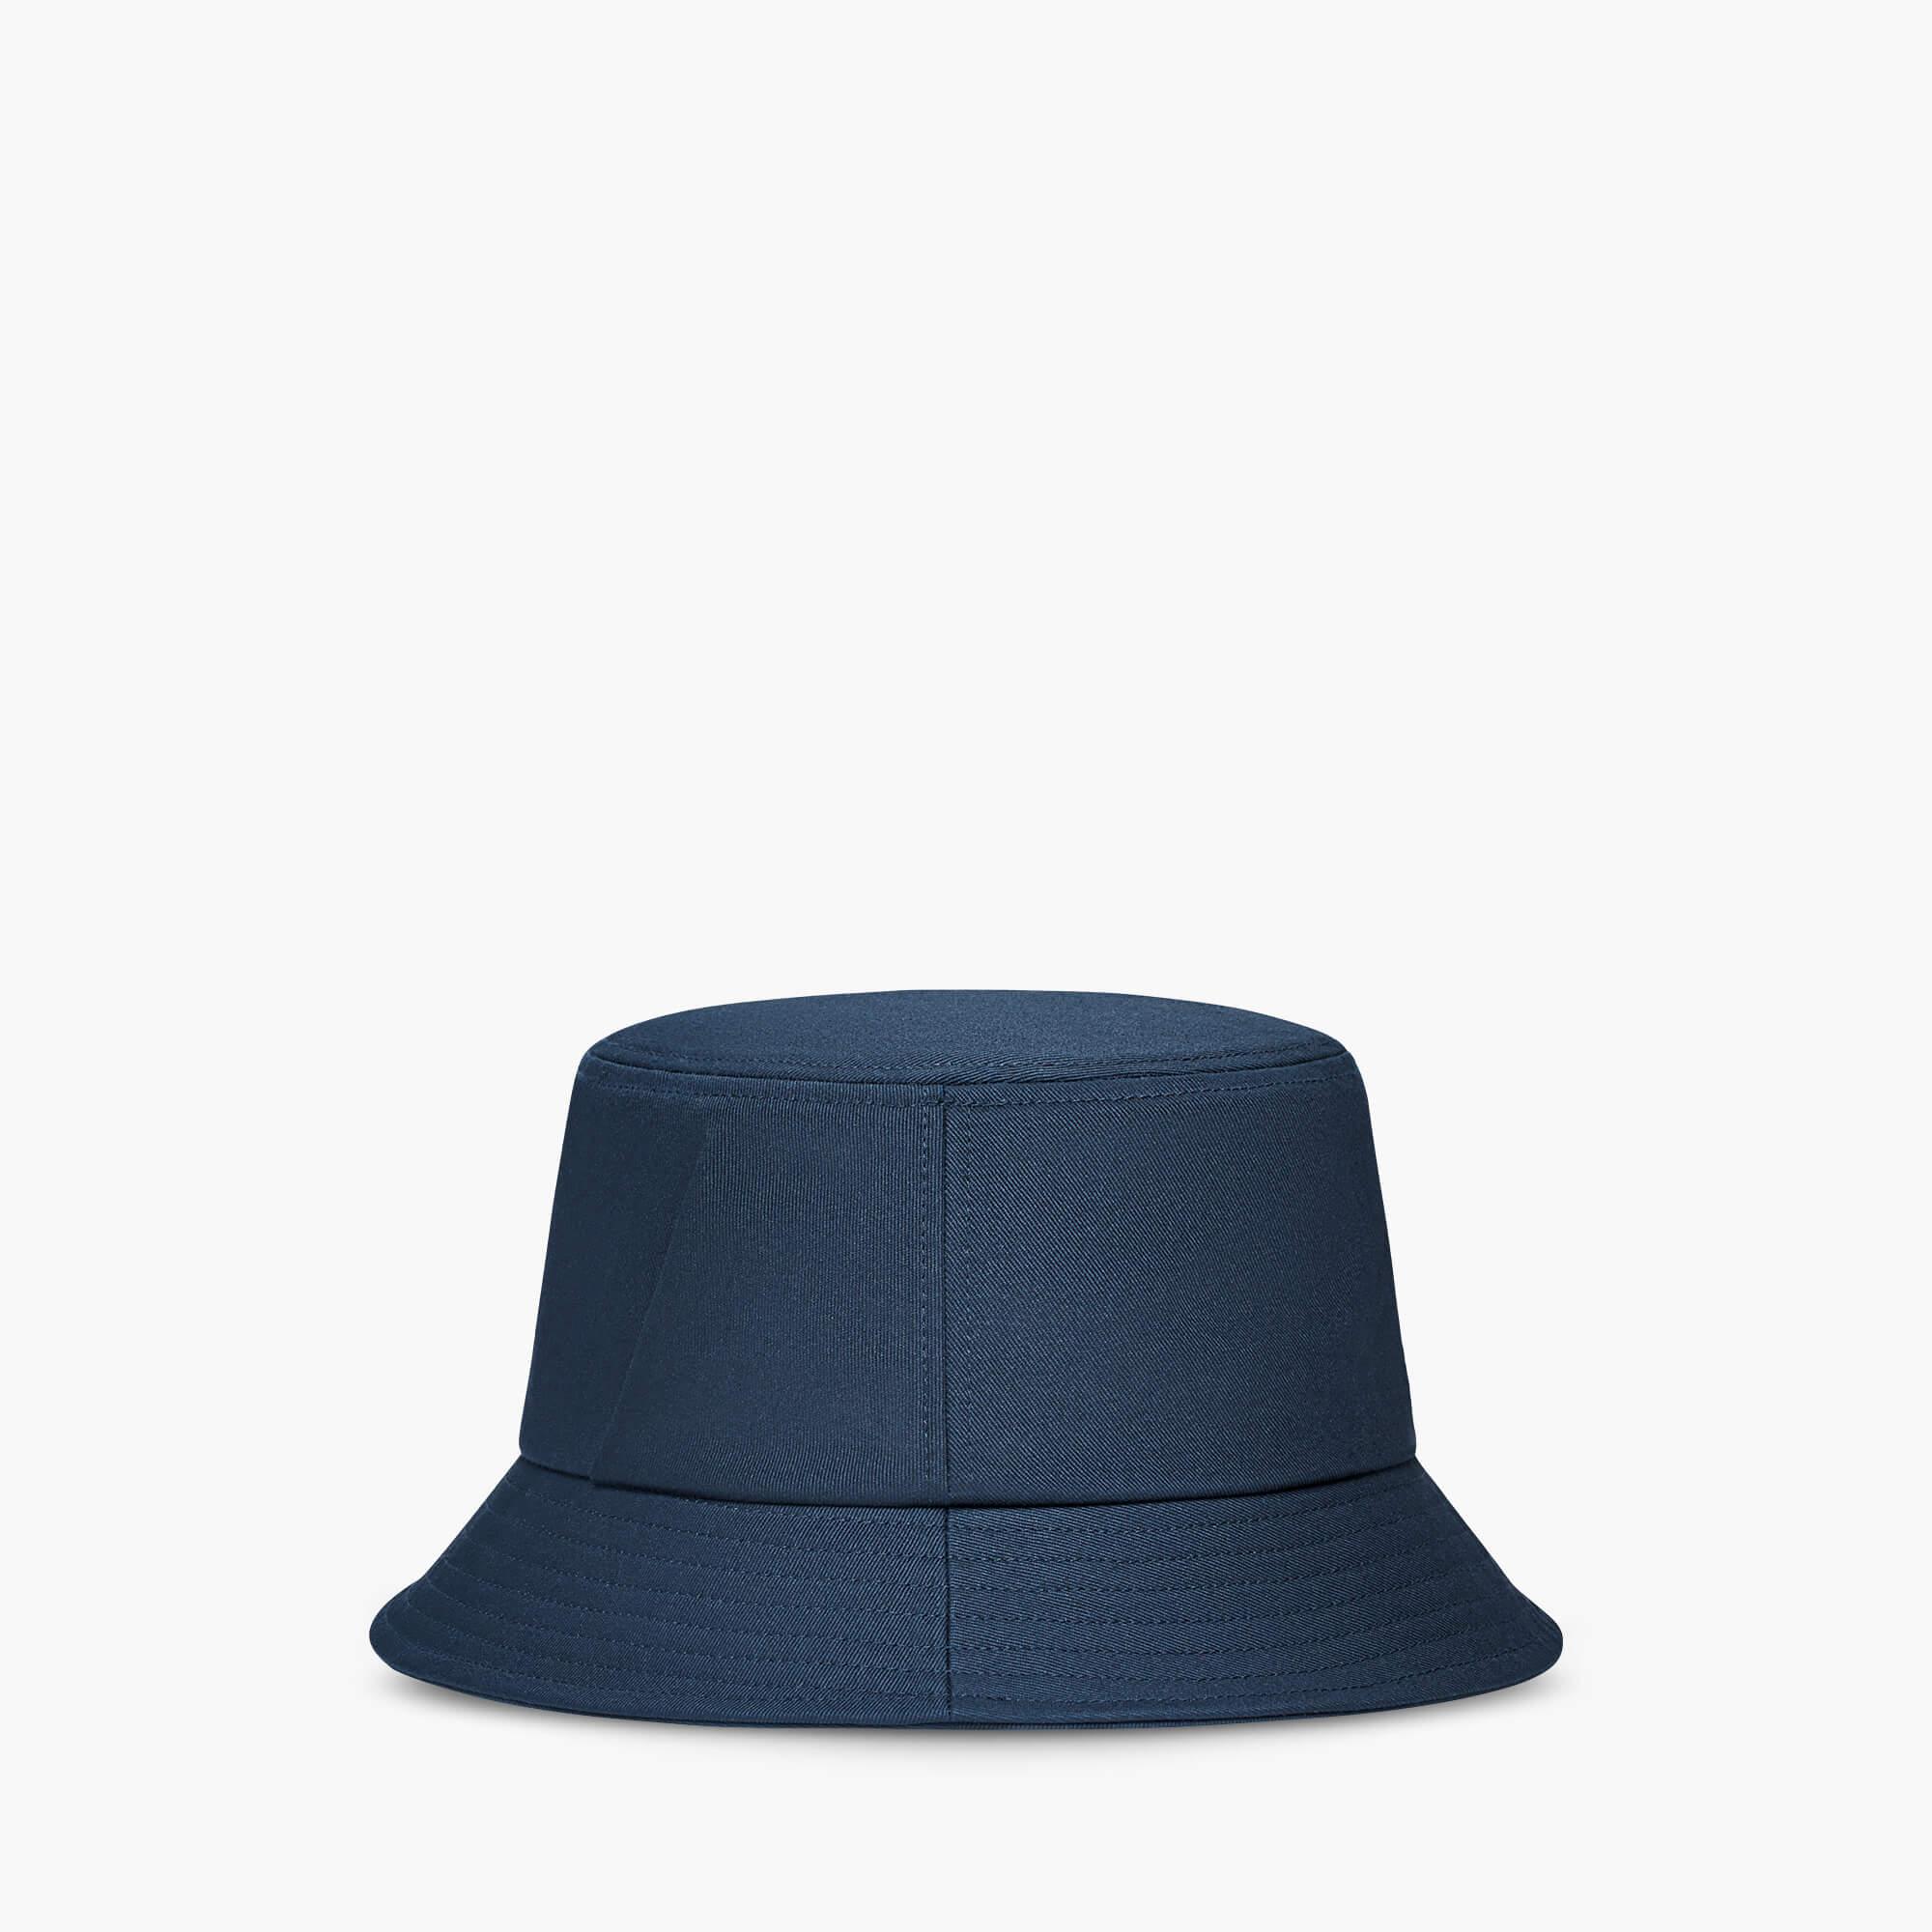 Cotton Sun hat For Summer